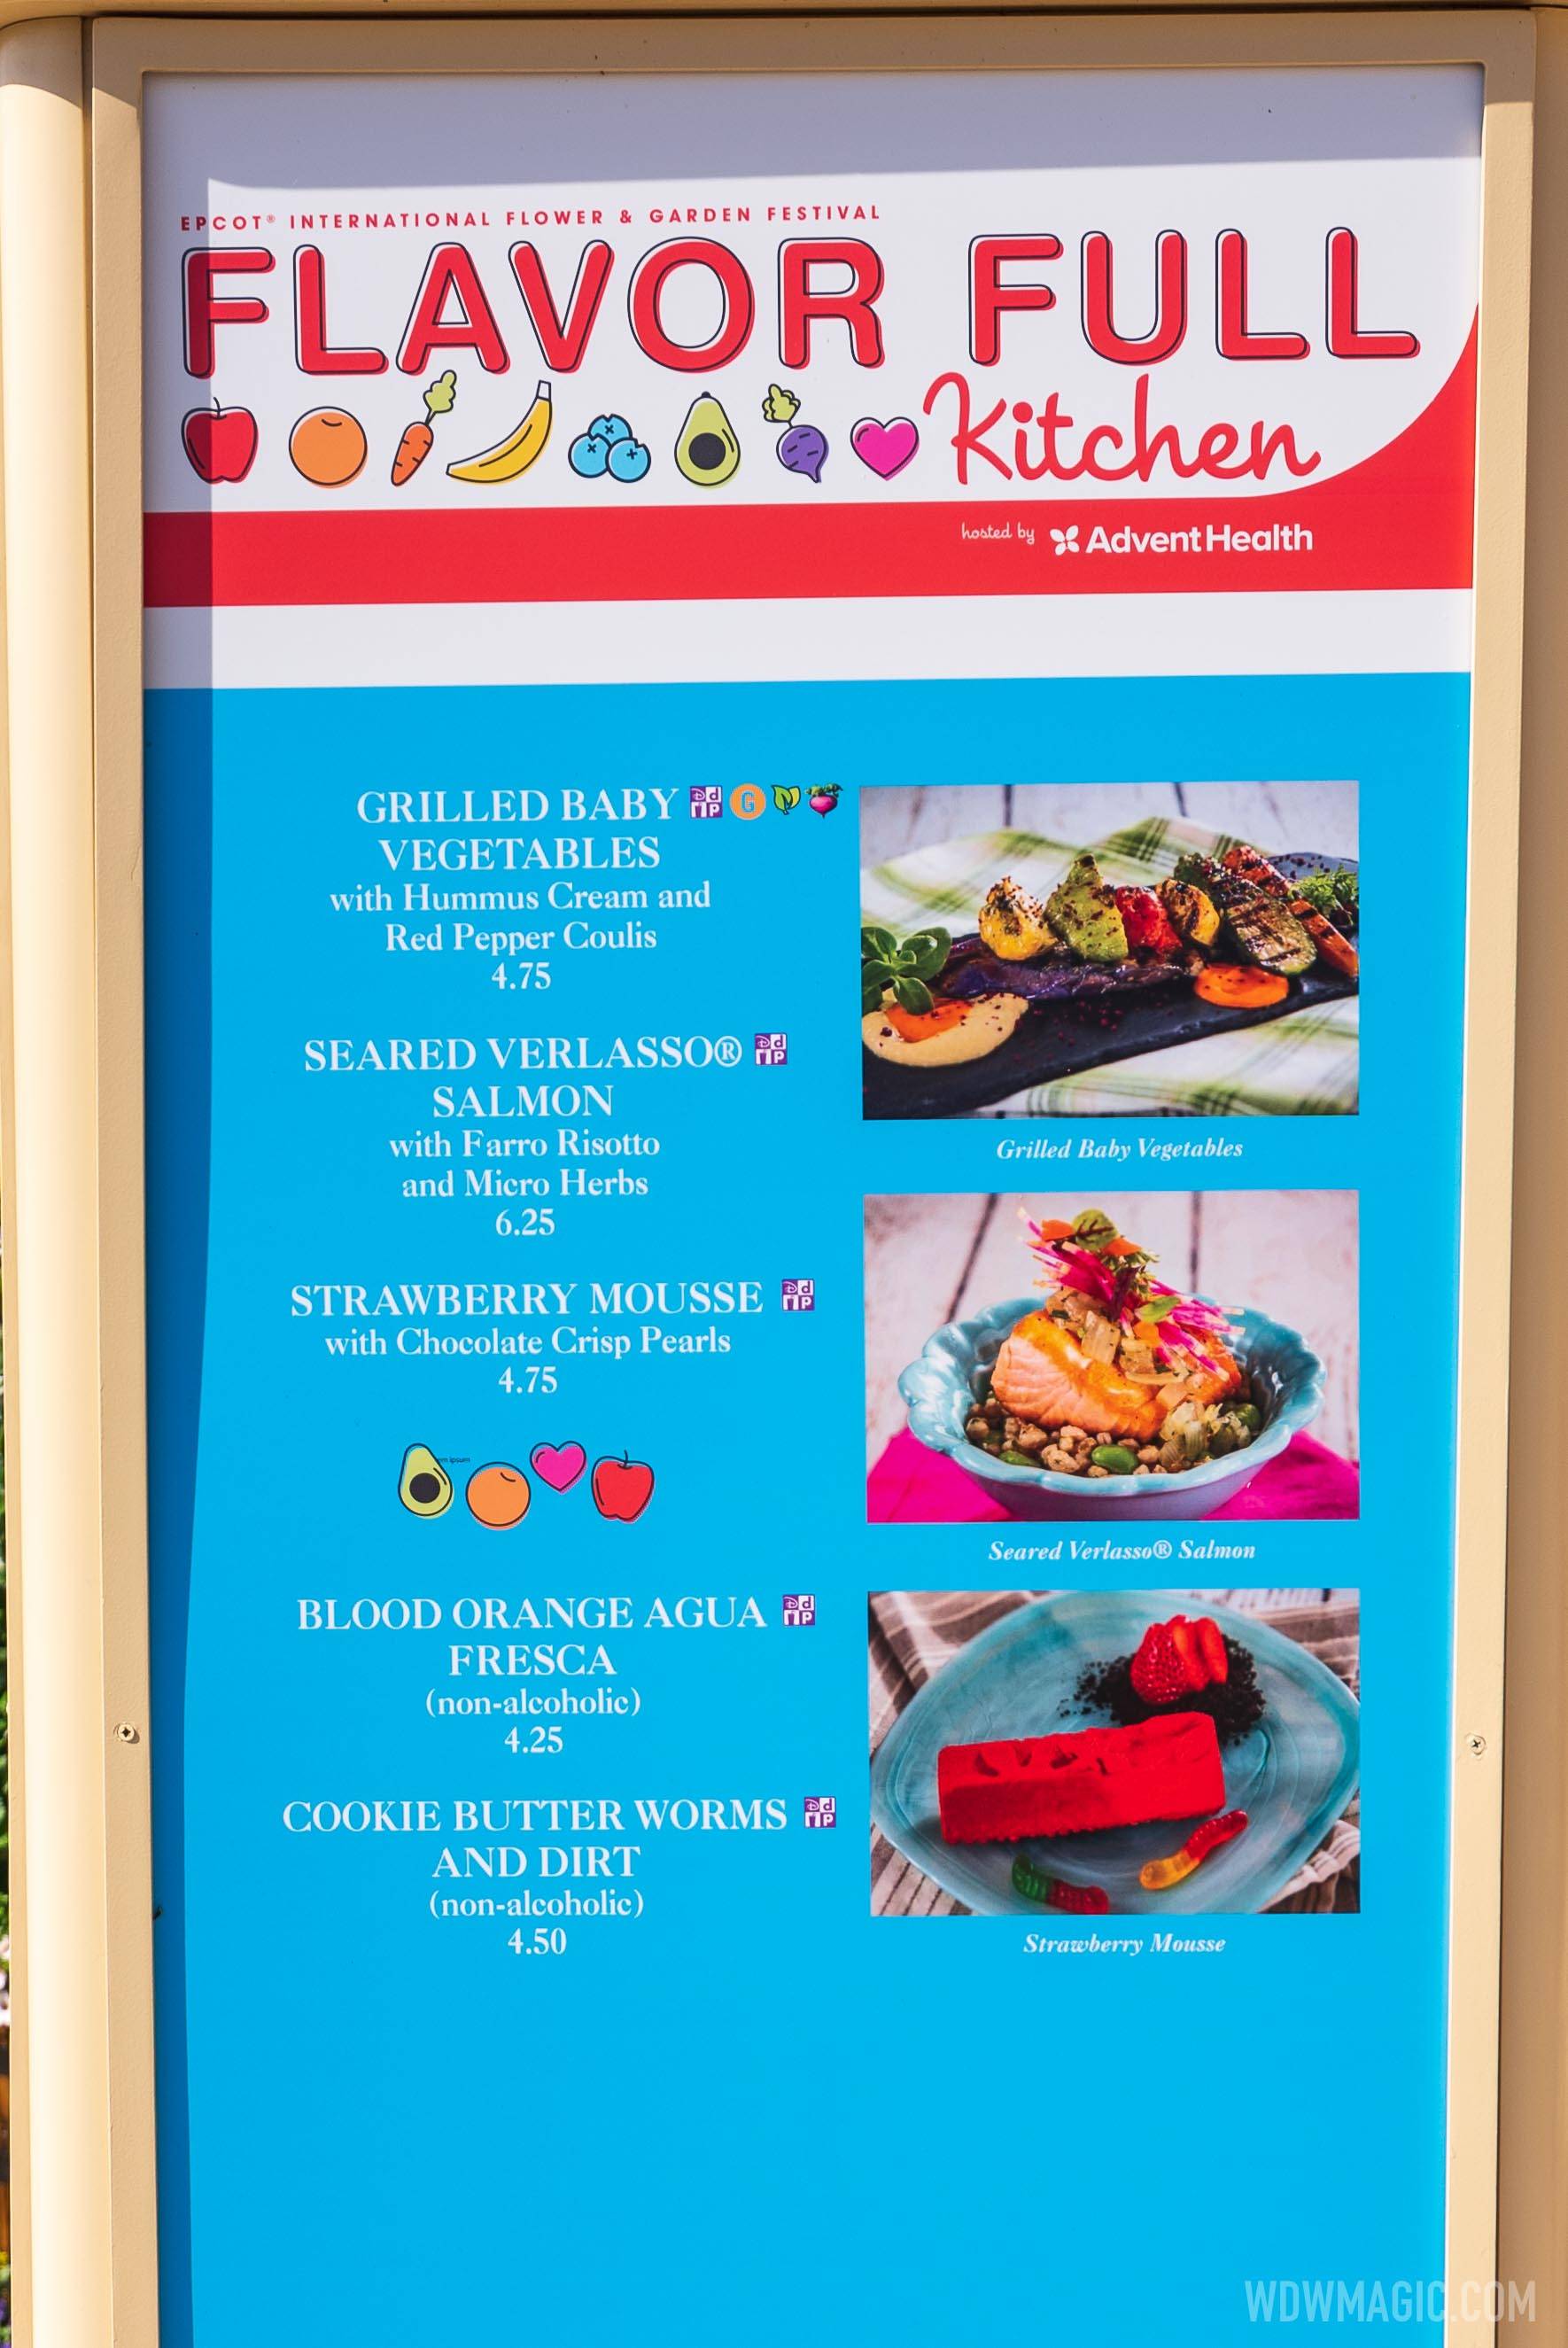 Flavor Full Kitchen kiosk menu